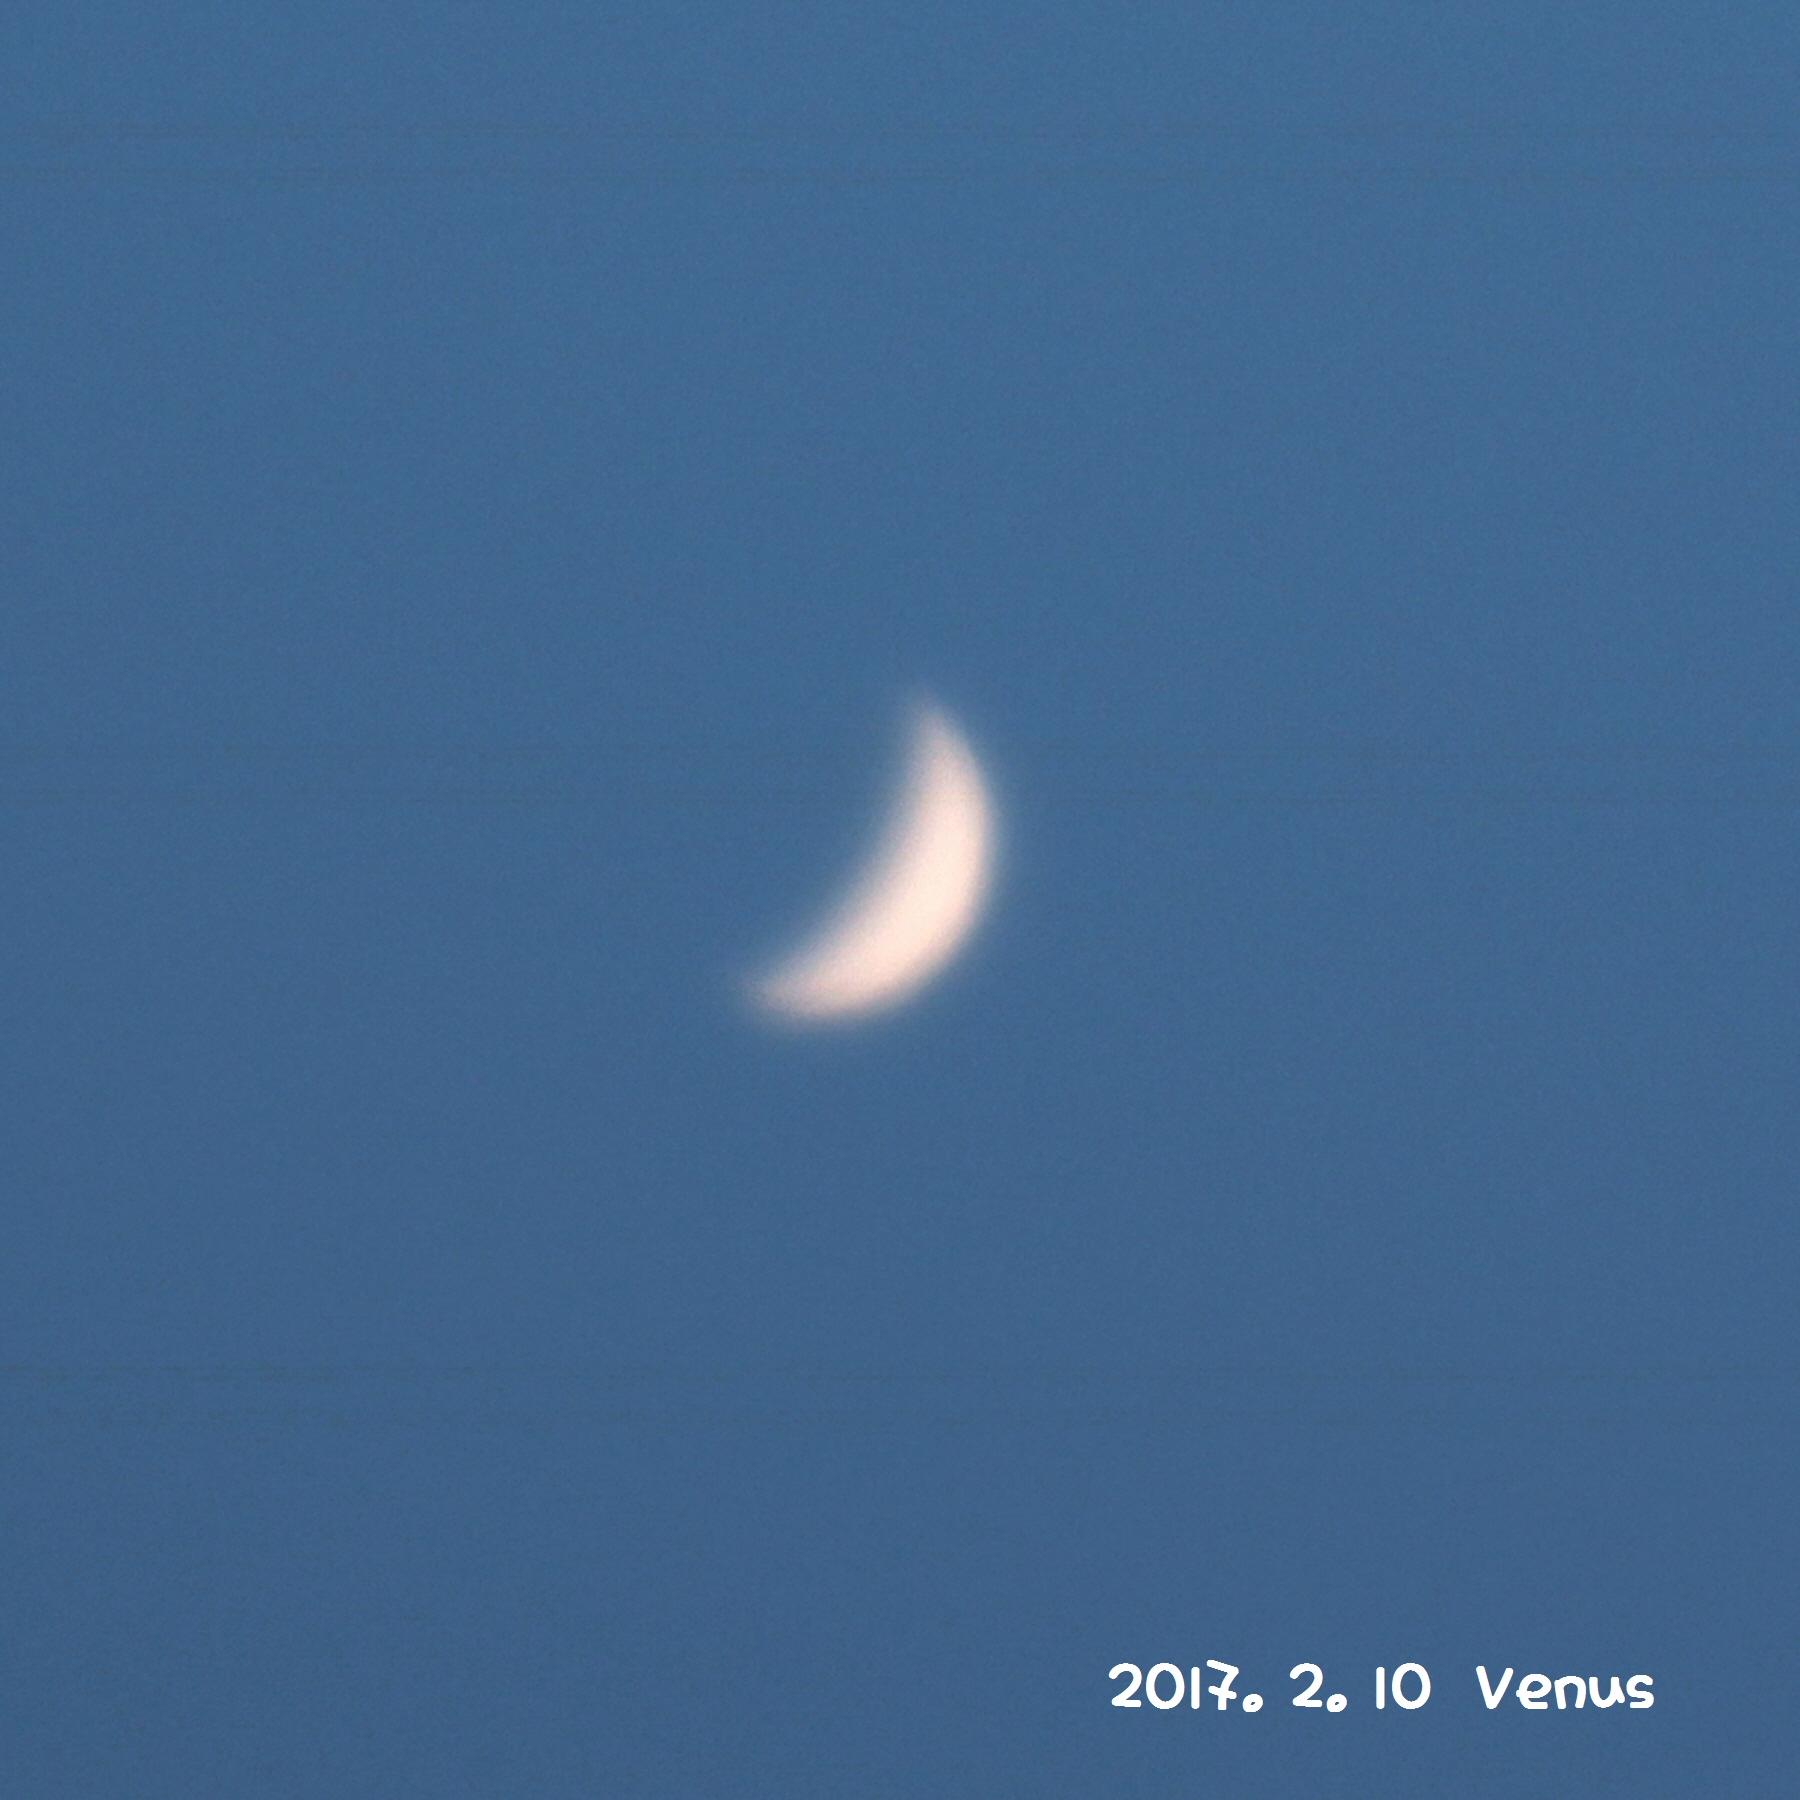 2017.2.10 Venus - 이름.jpg